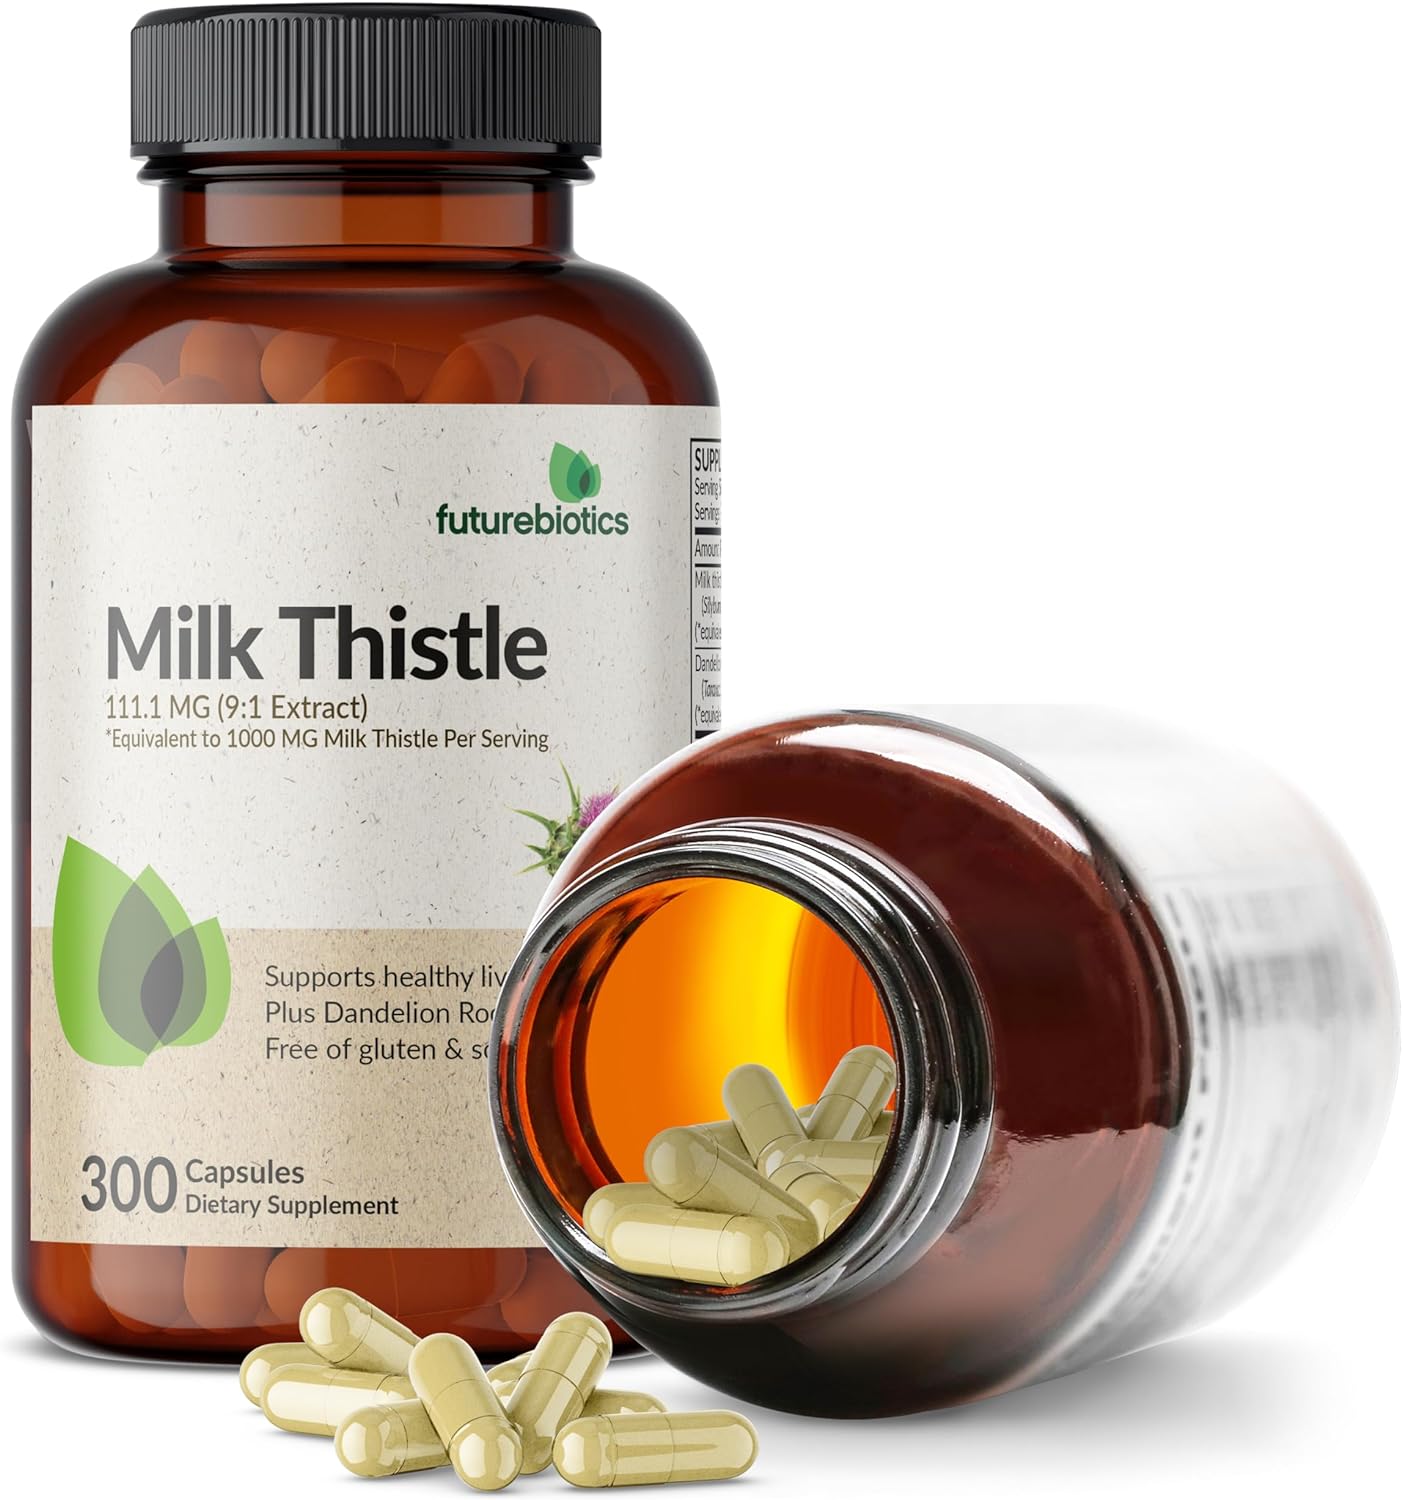 Futurebiotics Milk Thistle Silymarin Marianum & Dandelion Root Liver Health Support, Antioxidant Support, Detox, 300 Capsules : Health & Household